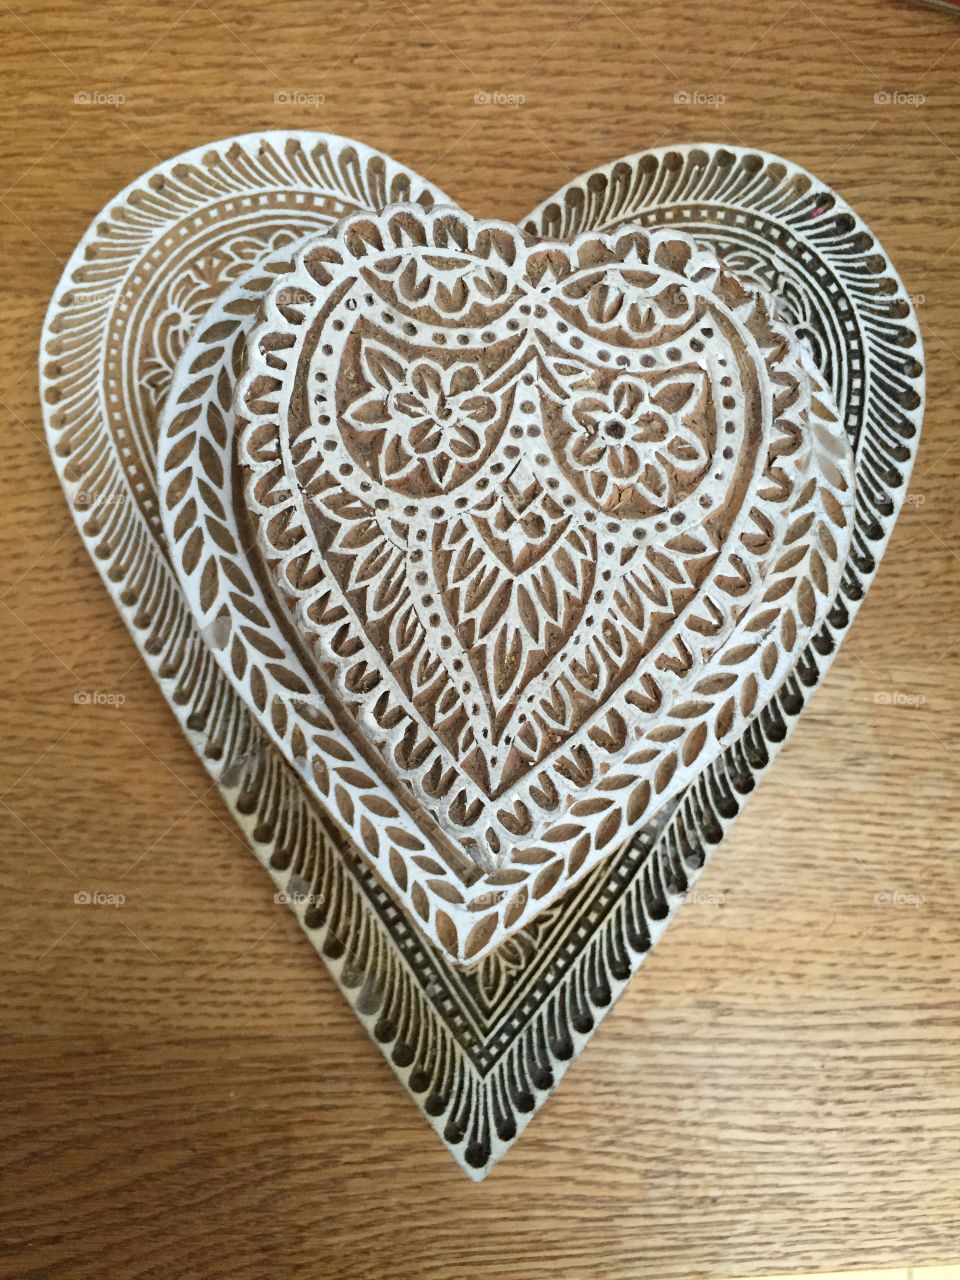 Heart carvings 